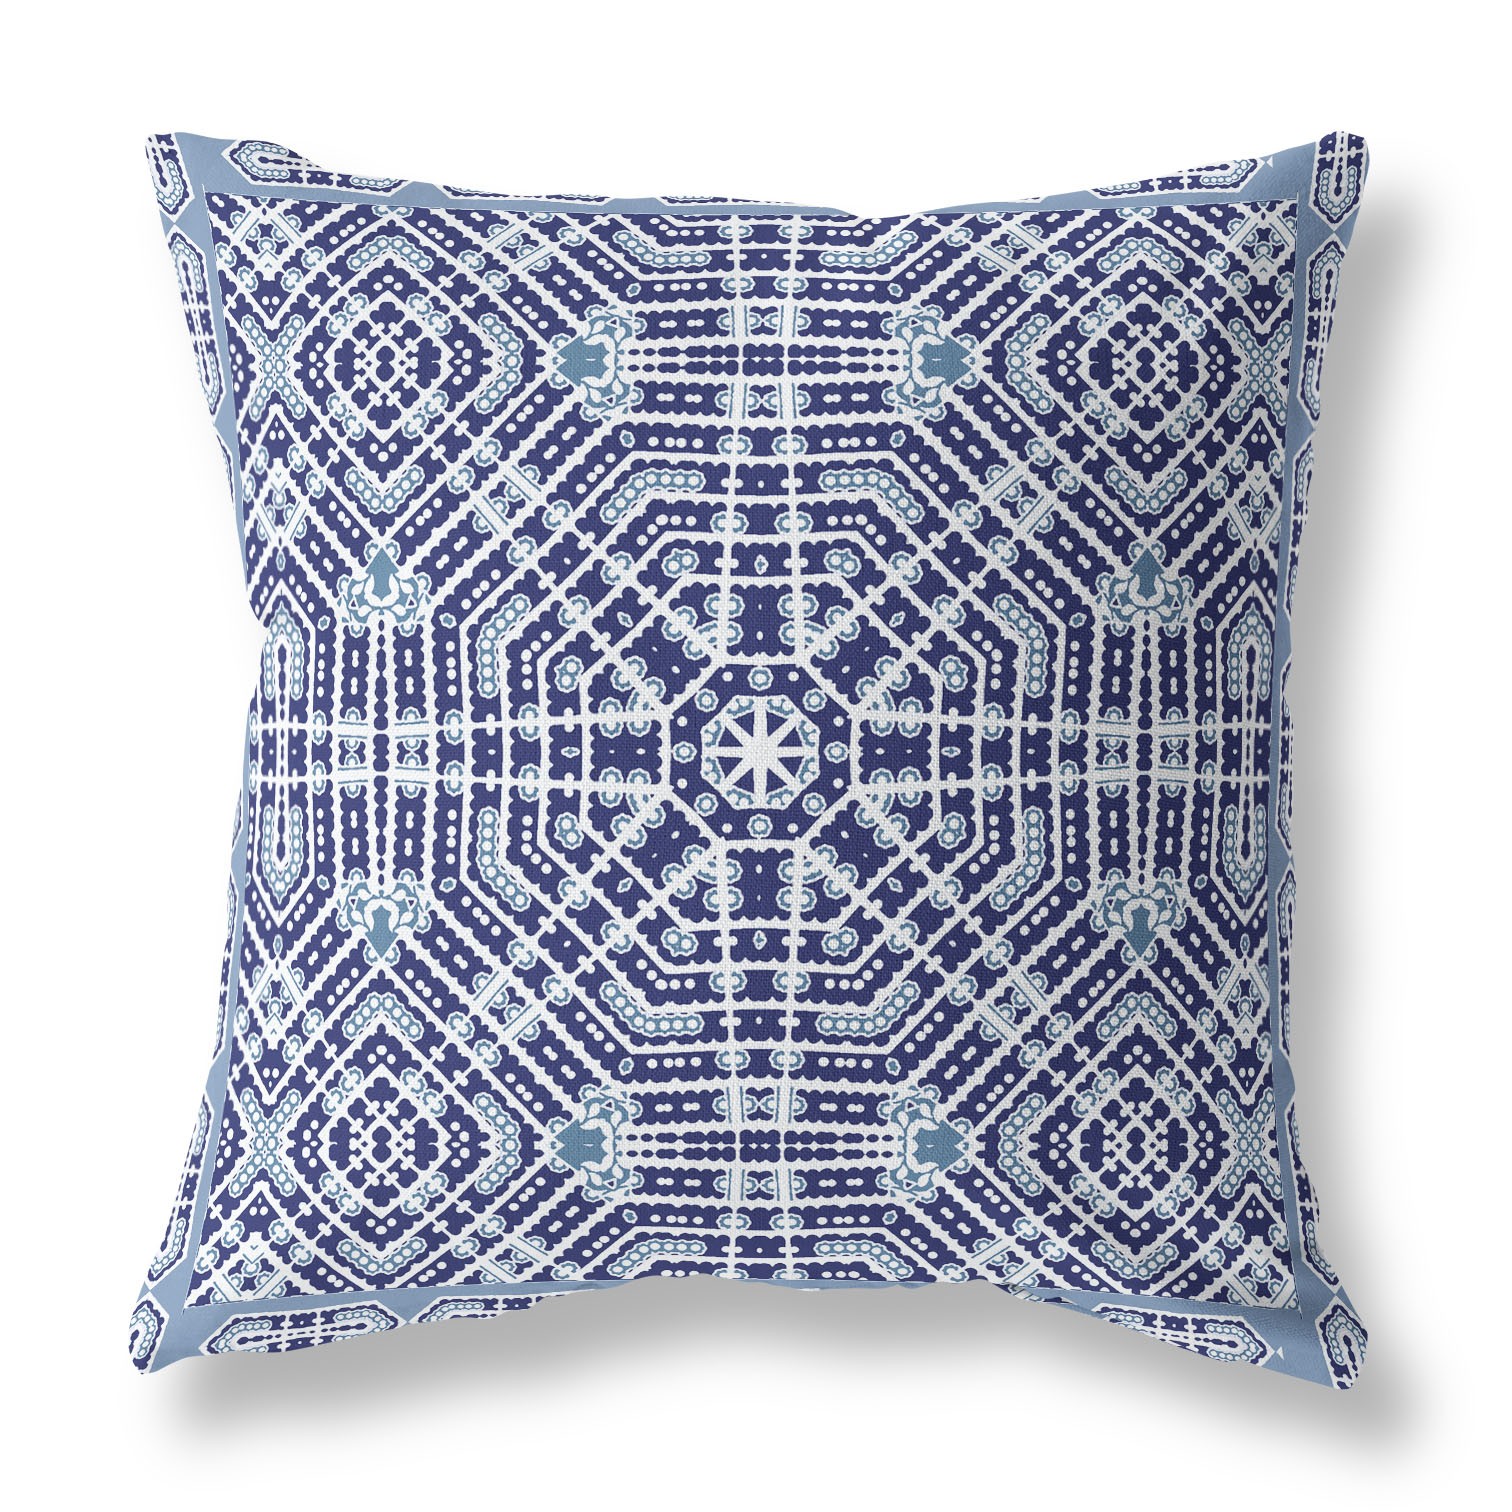 26” Indigo Blue Geostar Indoor Outdoor Throw Pillow-415028-1